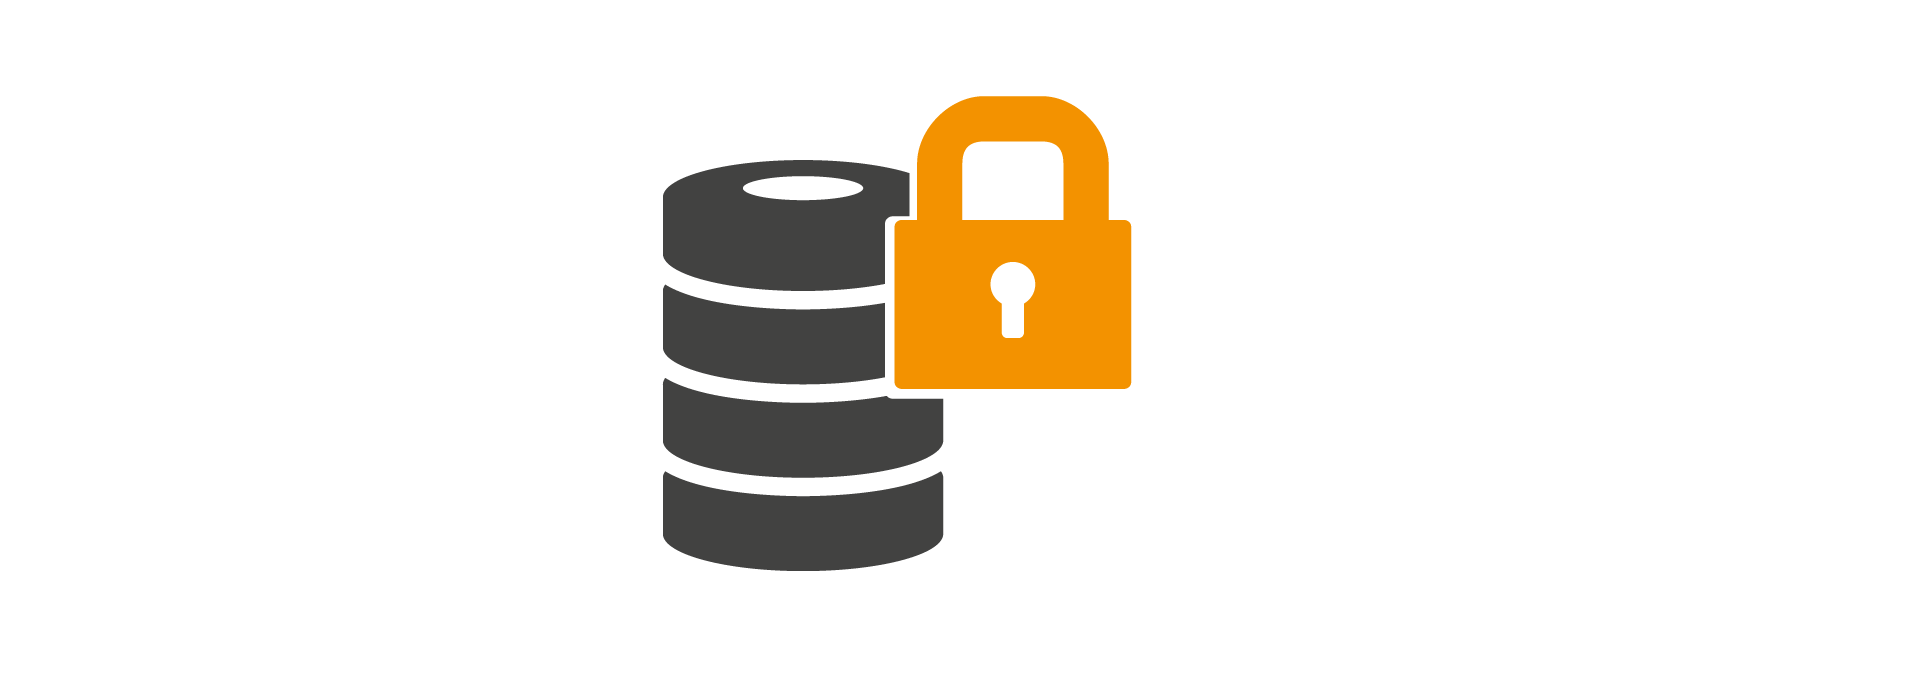 Externe Datensicherung Logo